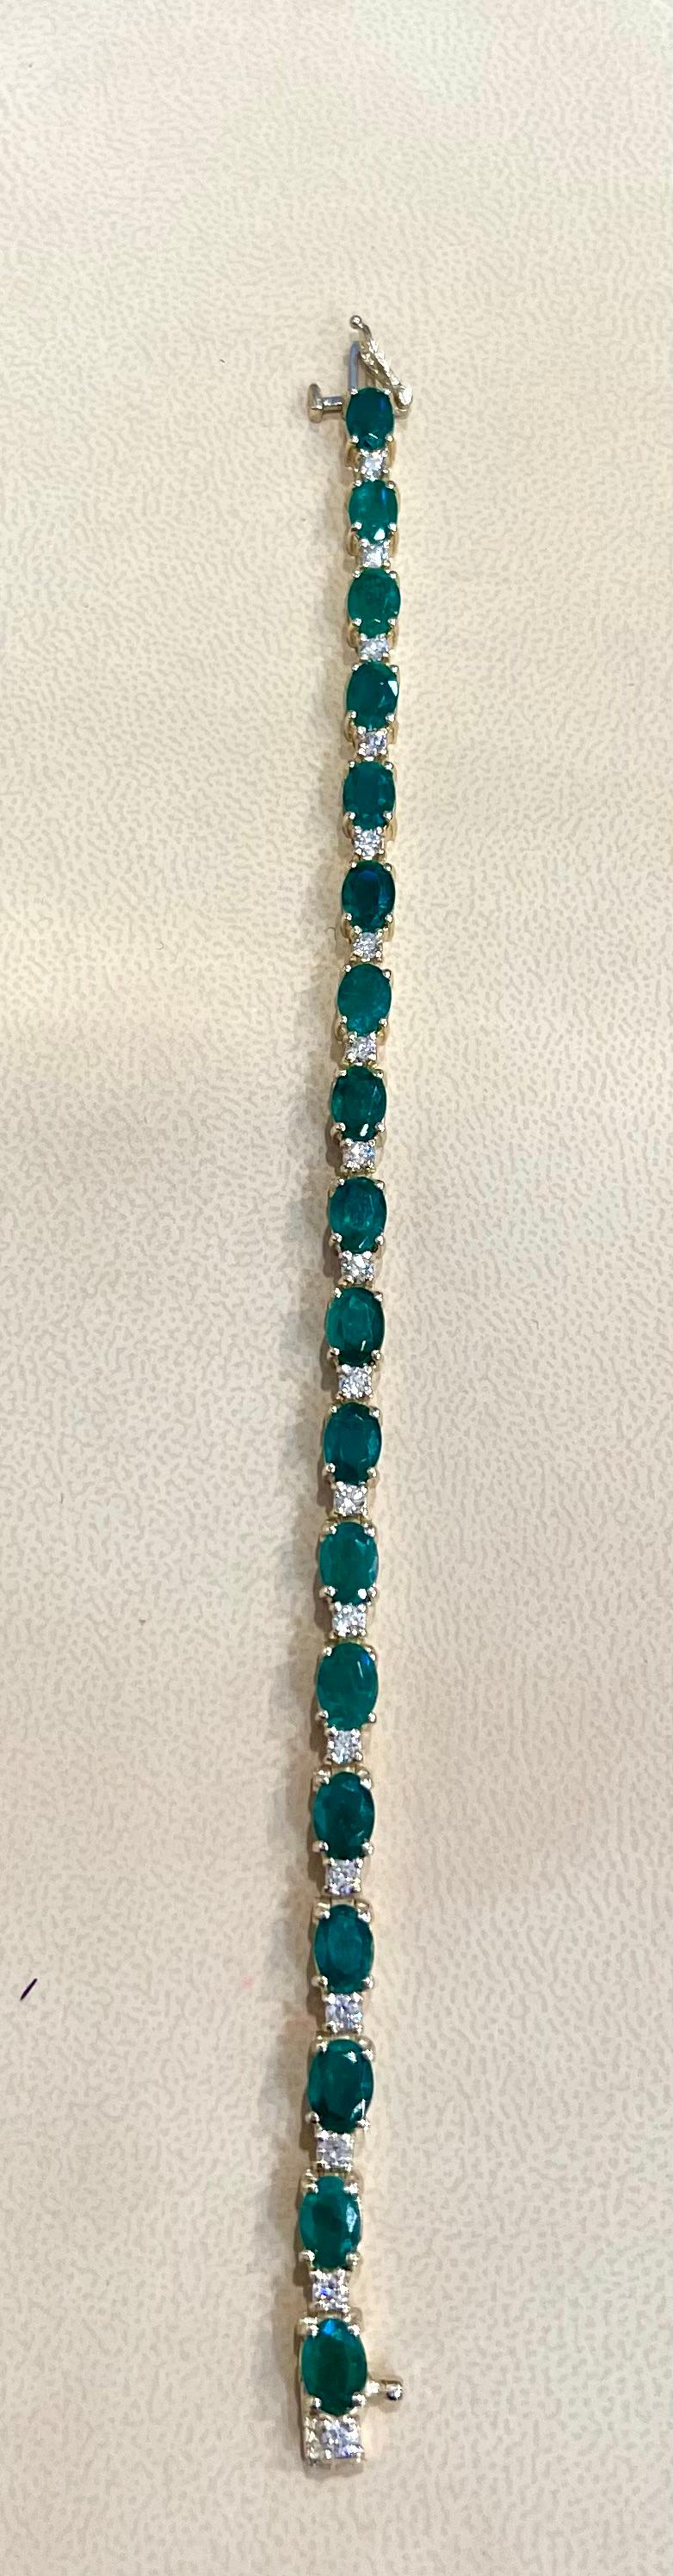 18 Carat Natural Emerald & Diamond Cocktail Tennis Bracelet 14 Karat White Gold For Sale 5